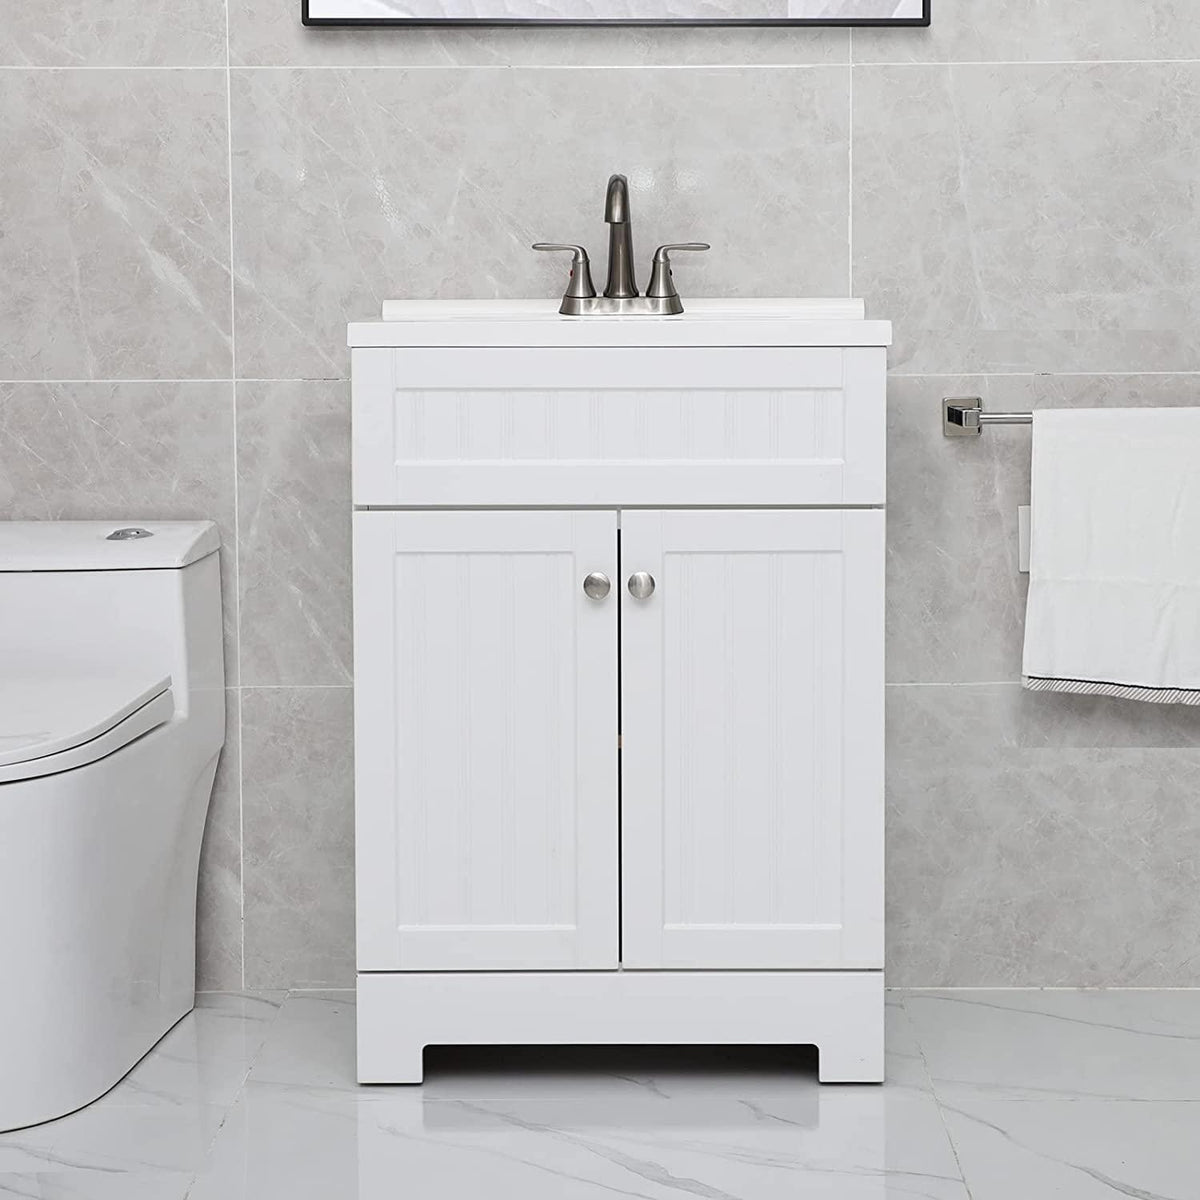 Eclife 24" -30" White Bathroom Vanity Cabinet Sink Combo W/Waterproof Resin Basin Countertop & Stainless Steel Faucet & Pop Up Drain